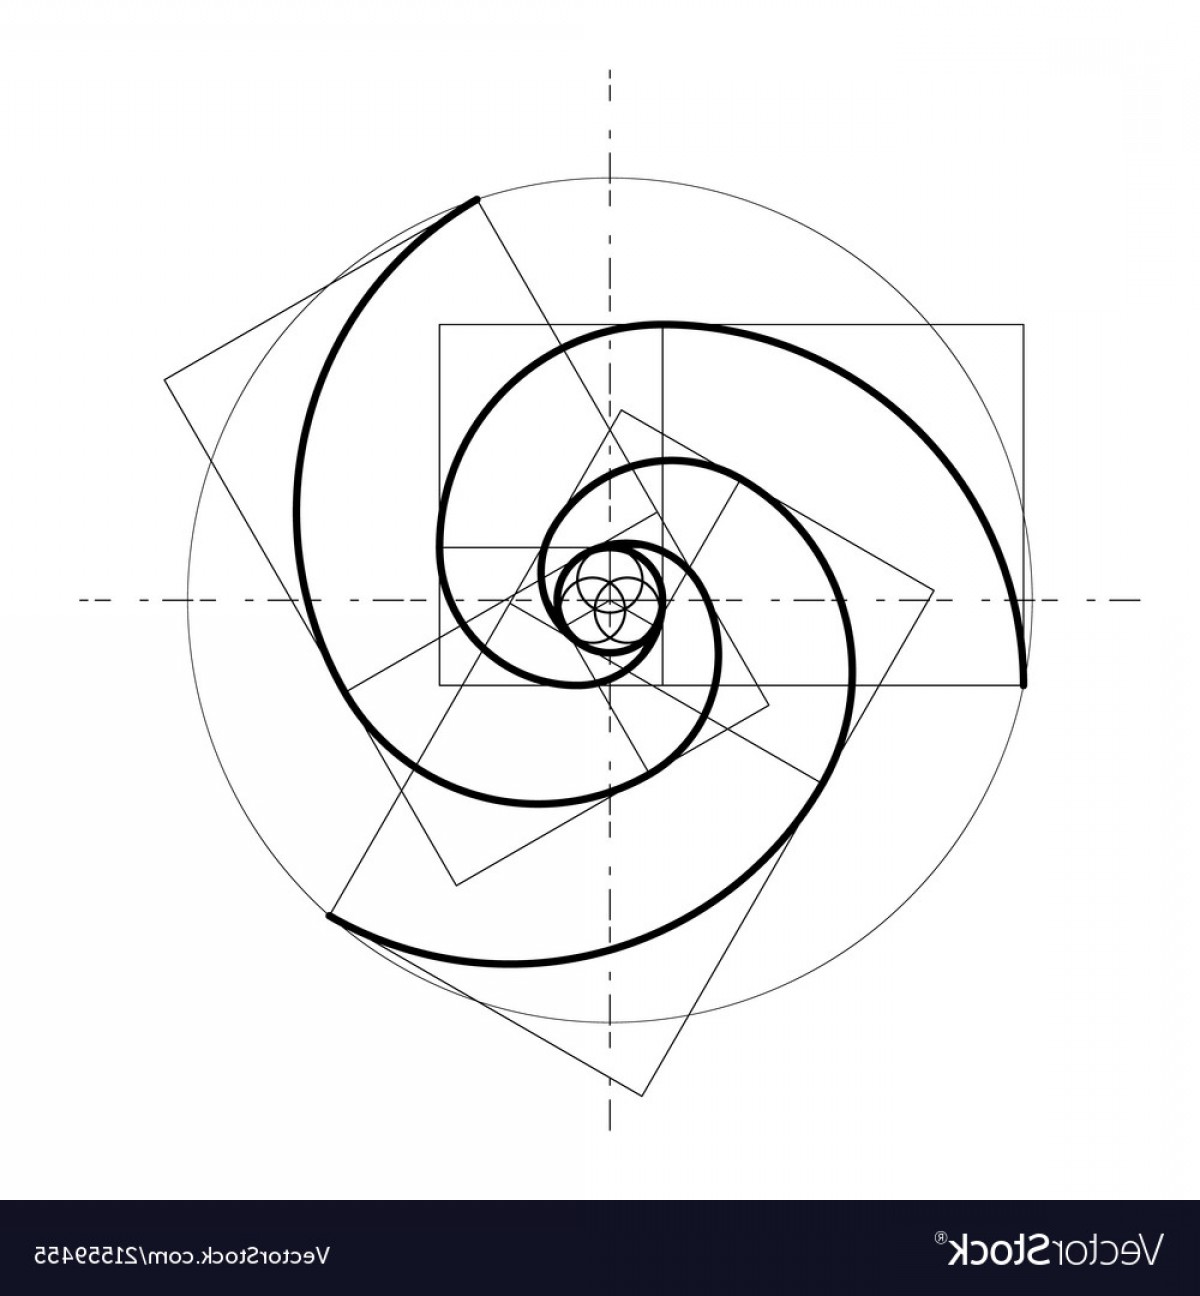 30 turn fibonacci spiral illustrator download